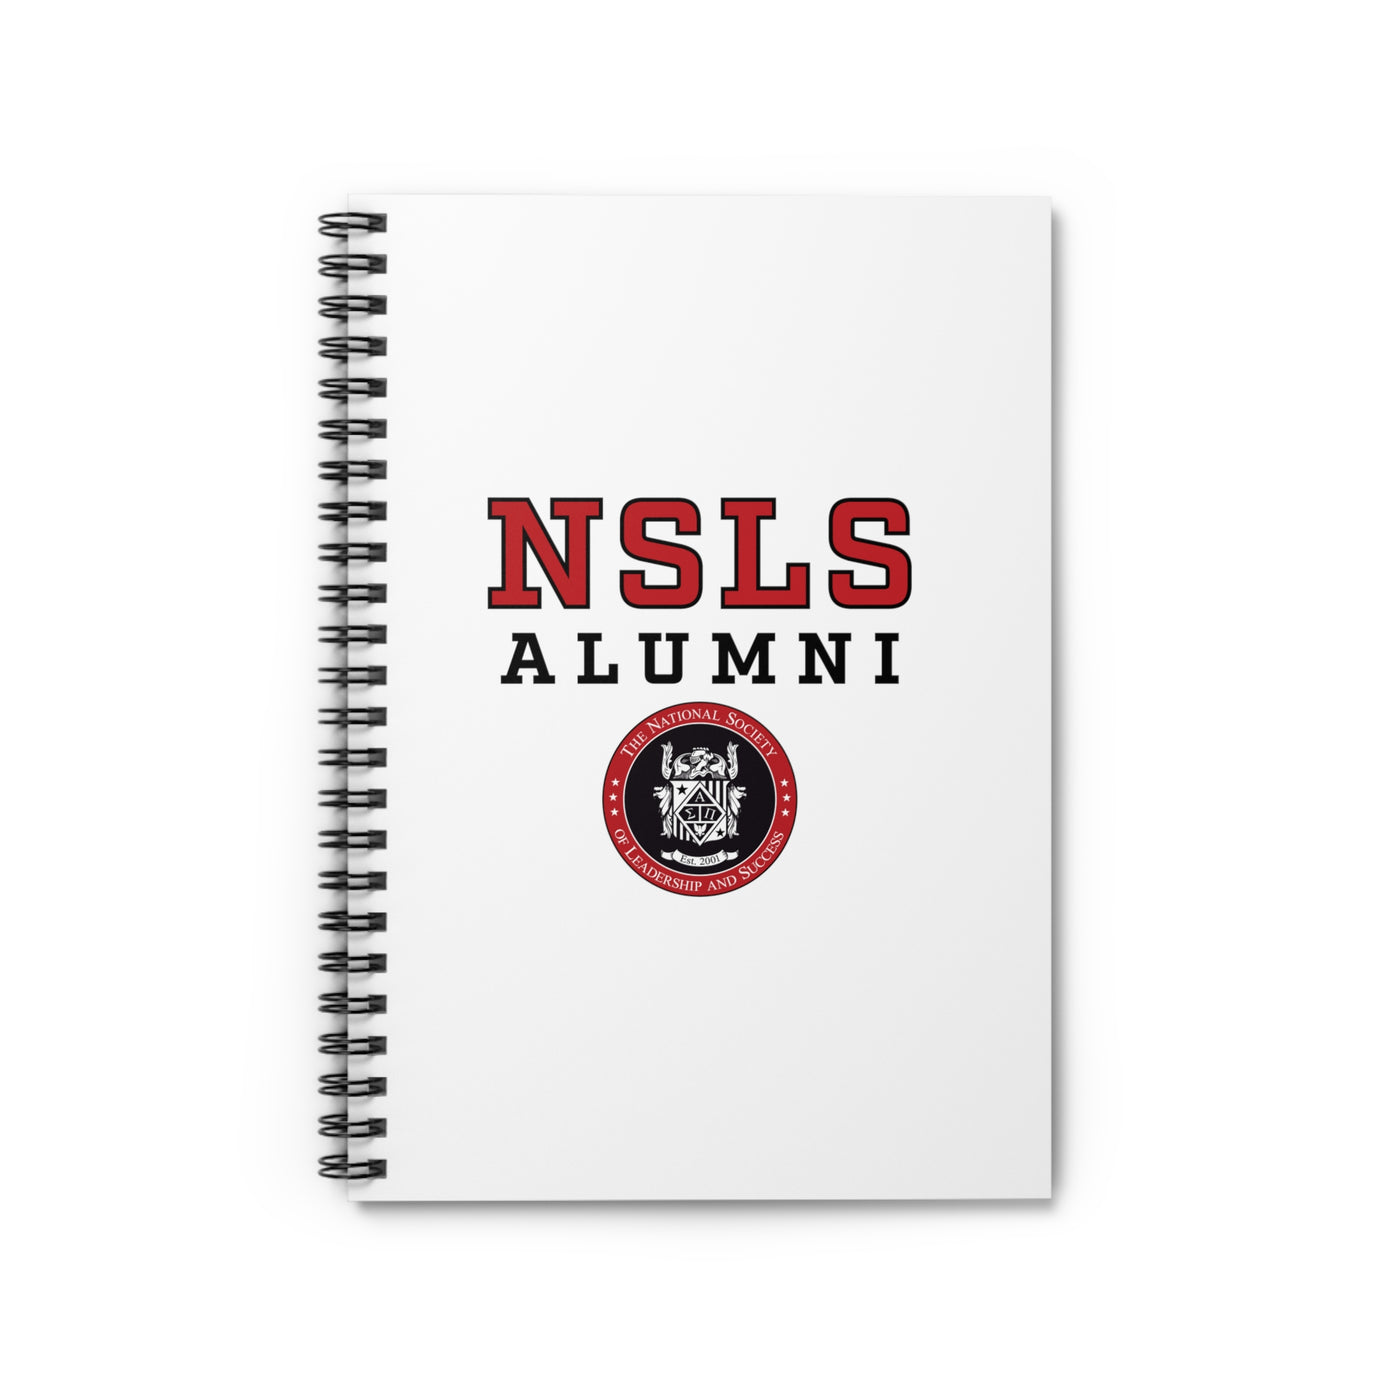 NSLS Alumni Spiral Notebook